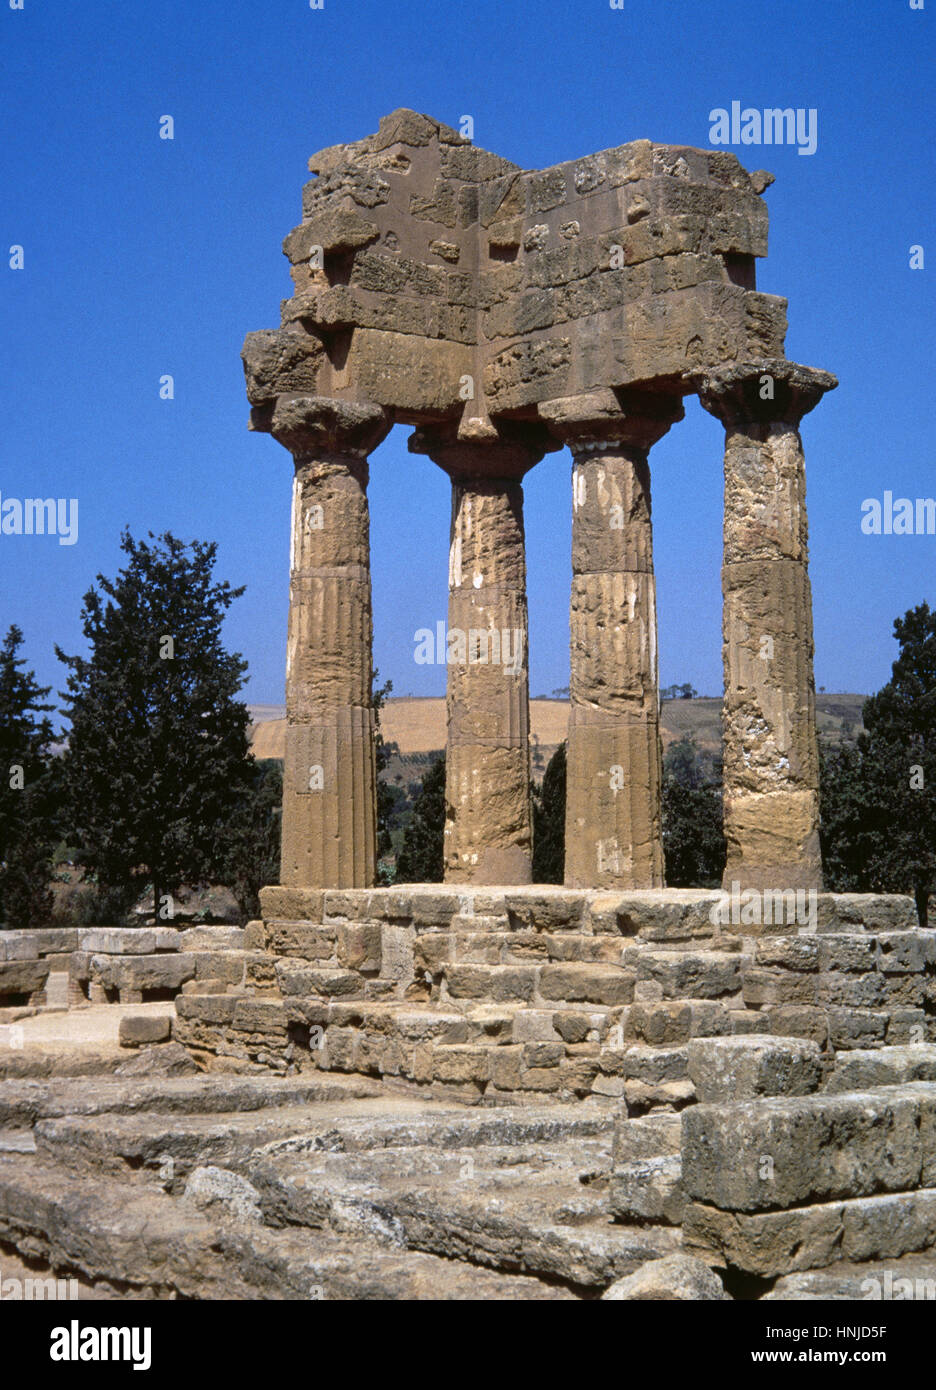 Italien. Sizilien. Agrigento. Tal der Tempel. Die Dioskuren (Castor und Pollux)-Tempel (Tempel ich). UNESCO-Weltkulturerbe. Stockfoto